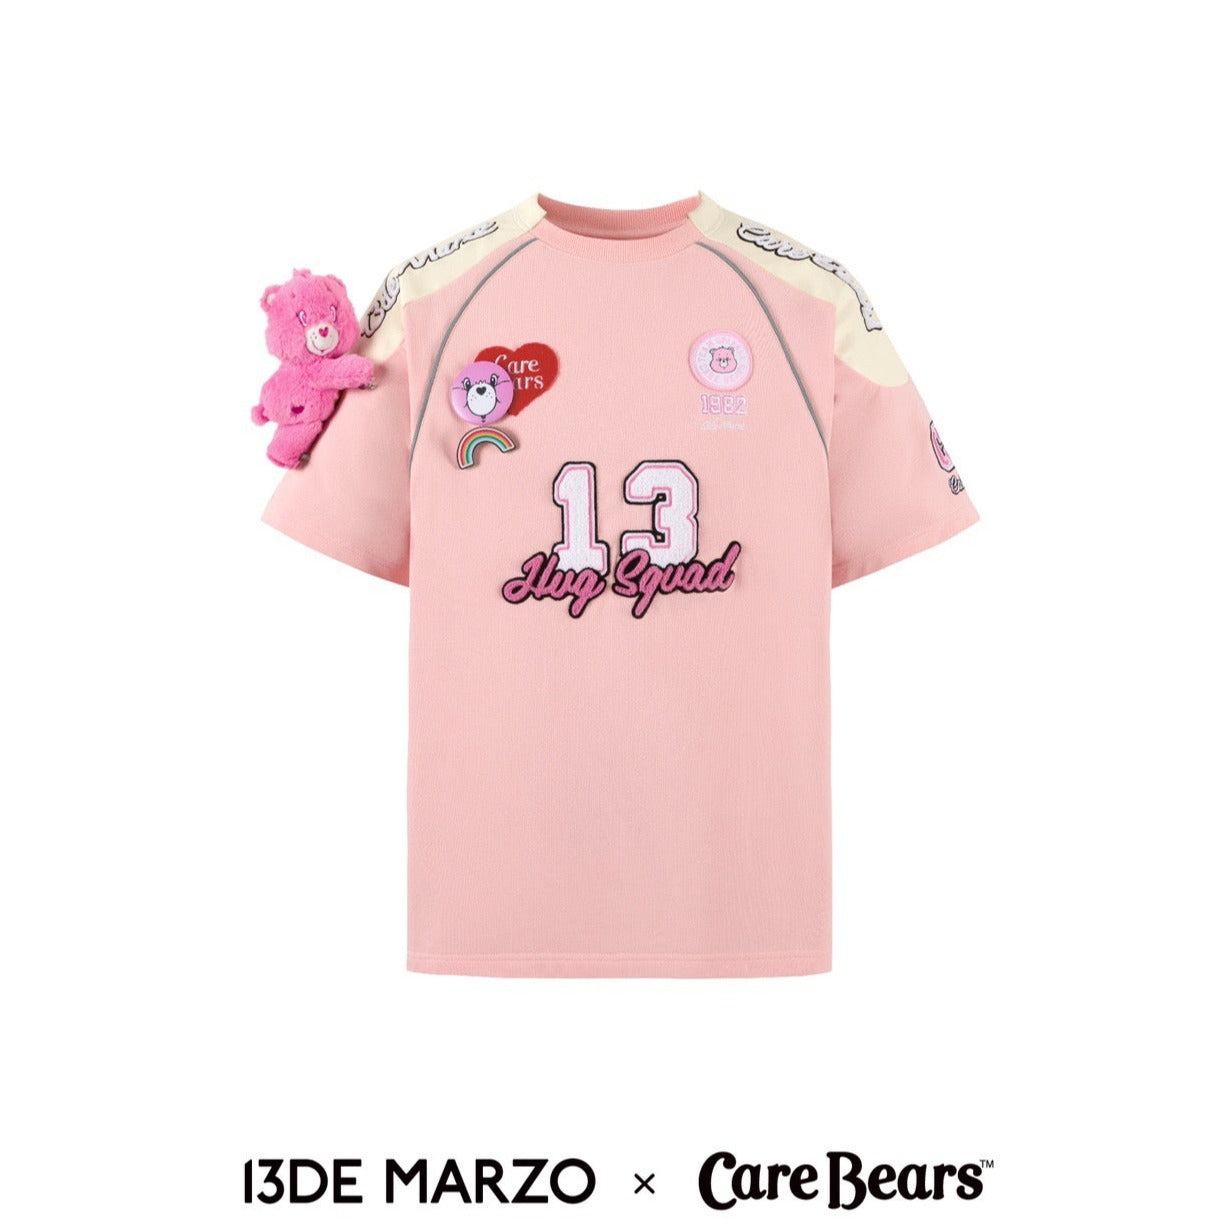 13DE MARZO x CARE BEARS Hud Squad T-shirt Almond Blossom